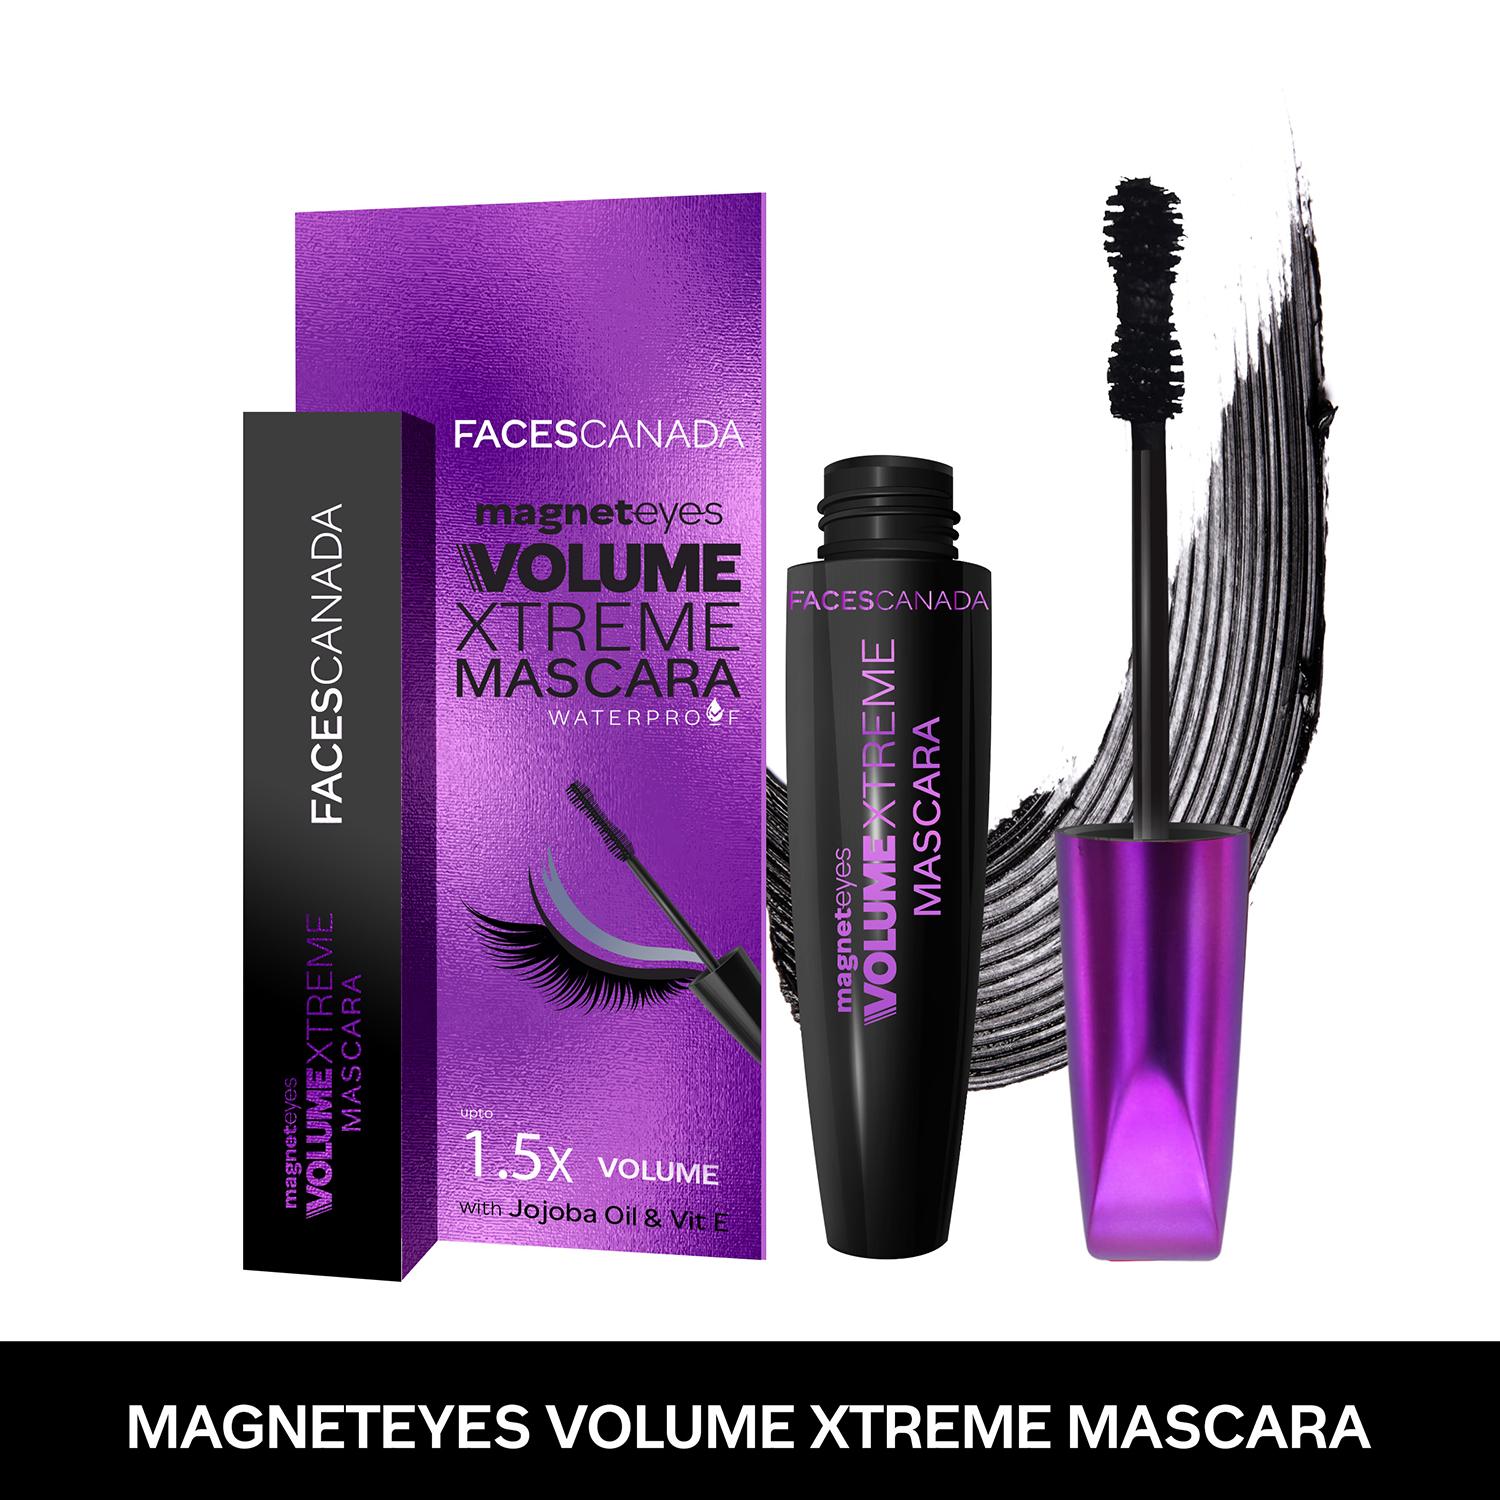 Faces Canada | Faces Canada Magneteyes Volume Xtreme Mascara,Lengthens Lashes, Waterproof, Long Wear - Black (8 g)